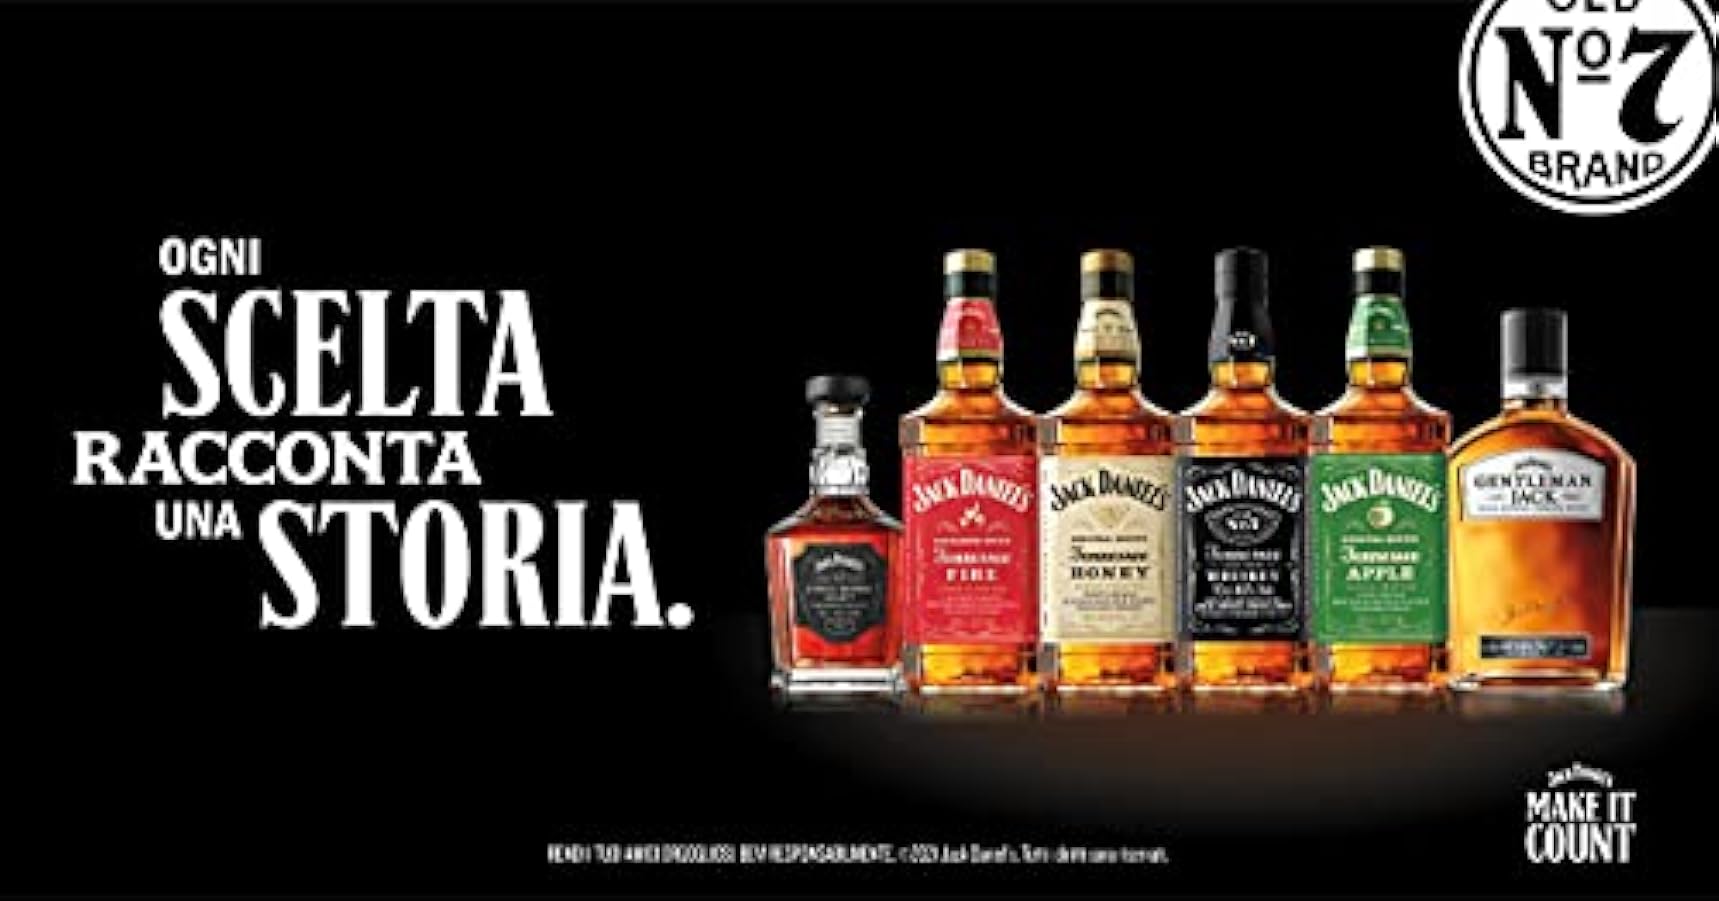 Jack Daniel’s Old No.7 Tennessee Whiskey 150cl - Whiskey filtrato attraverso il carbone. 40% vol. 723610616